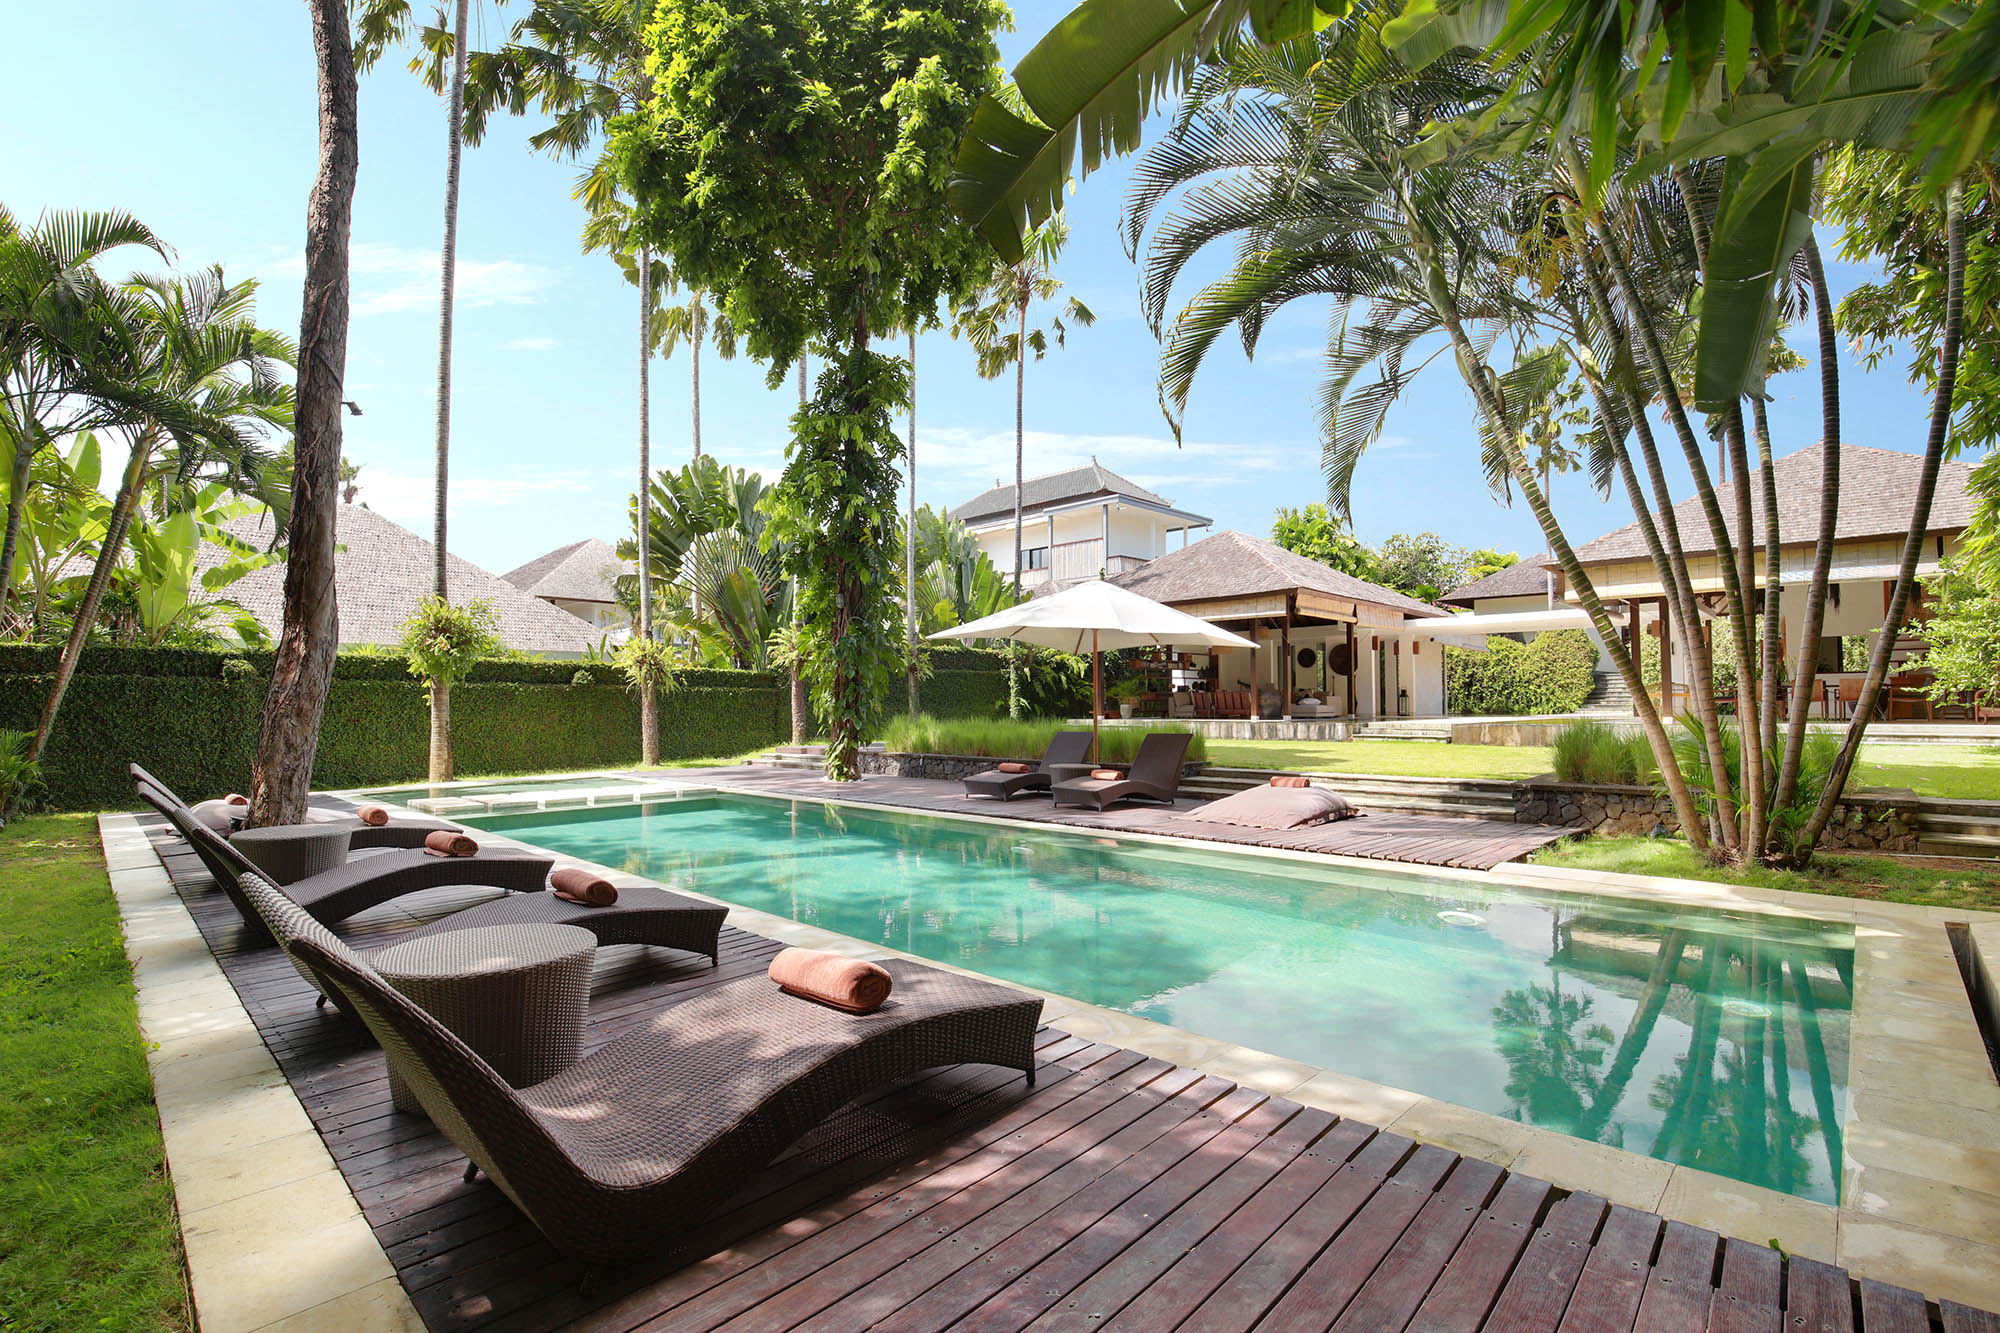 Bali Villa For Sale & Rent - Villa Management - Invest In Bali